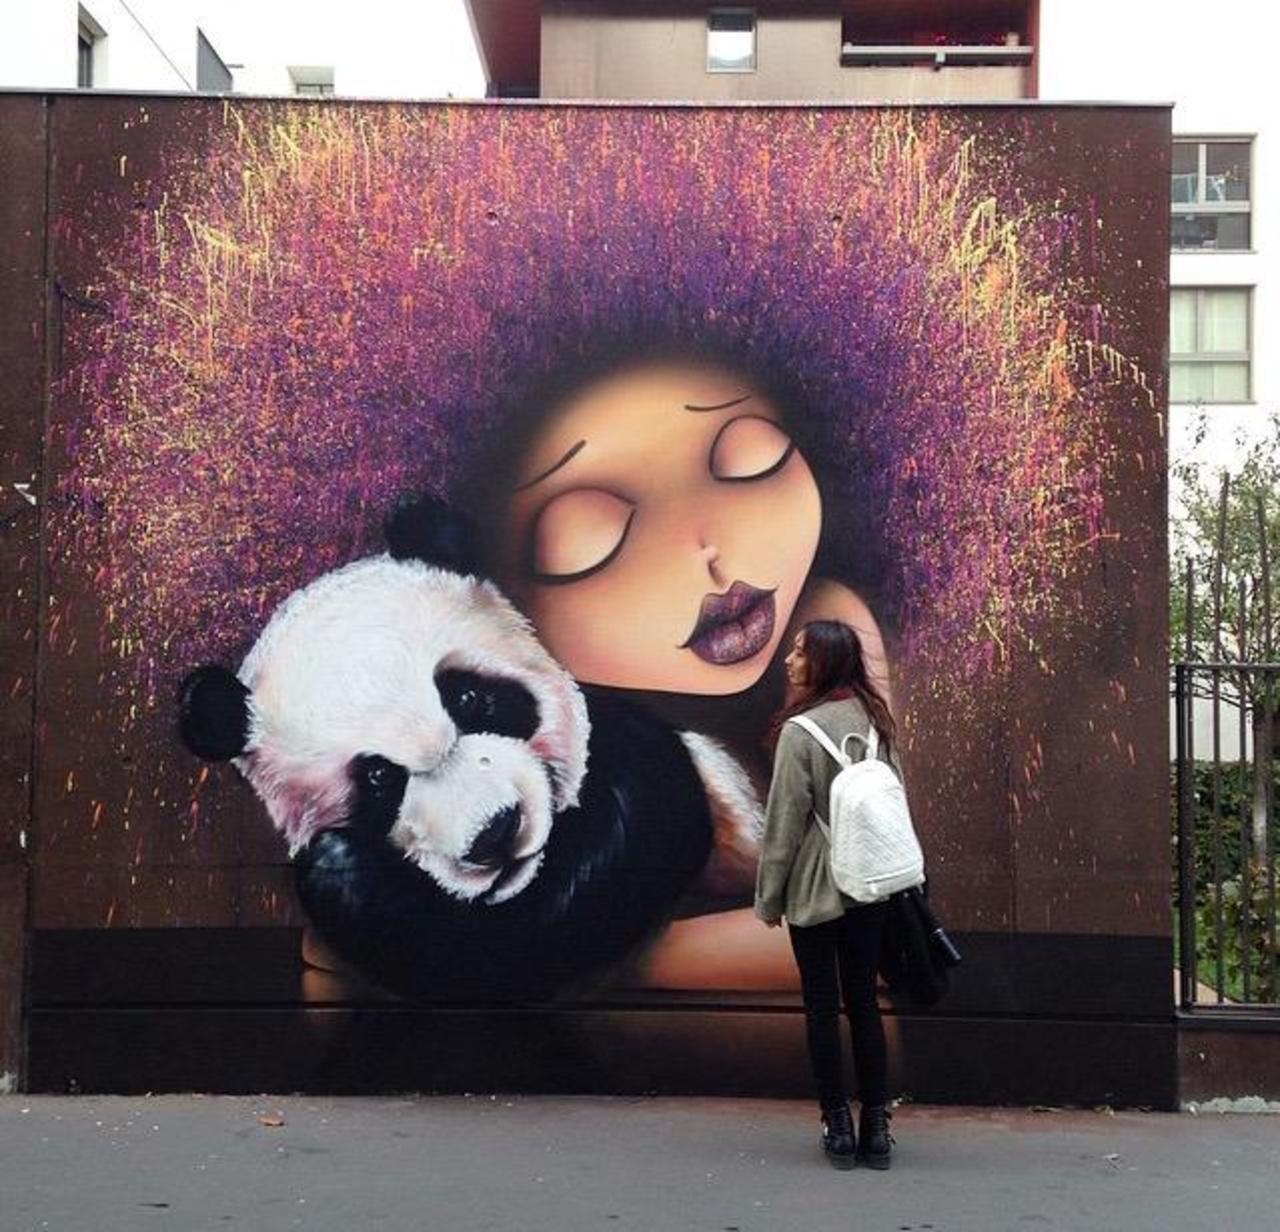 Street Art by VinieGraffiti in Paris 

#art #graffiti #mural #streetart http://t.co/dcHYvfT0Qi